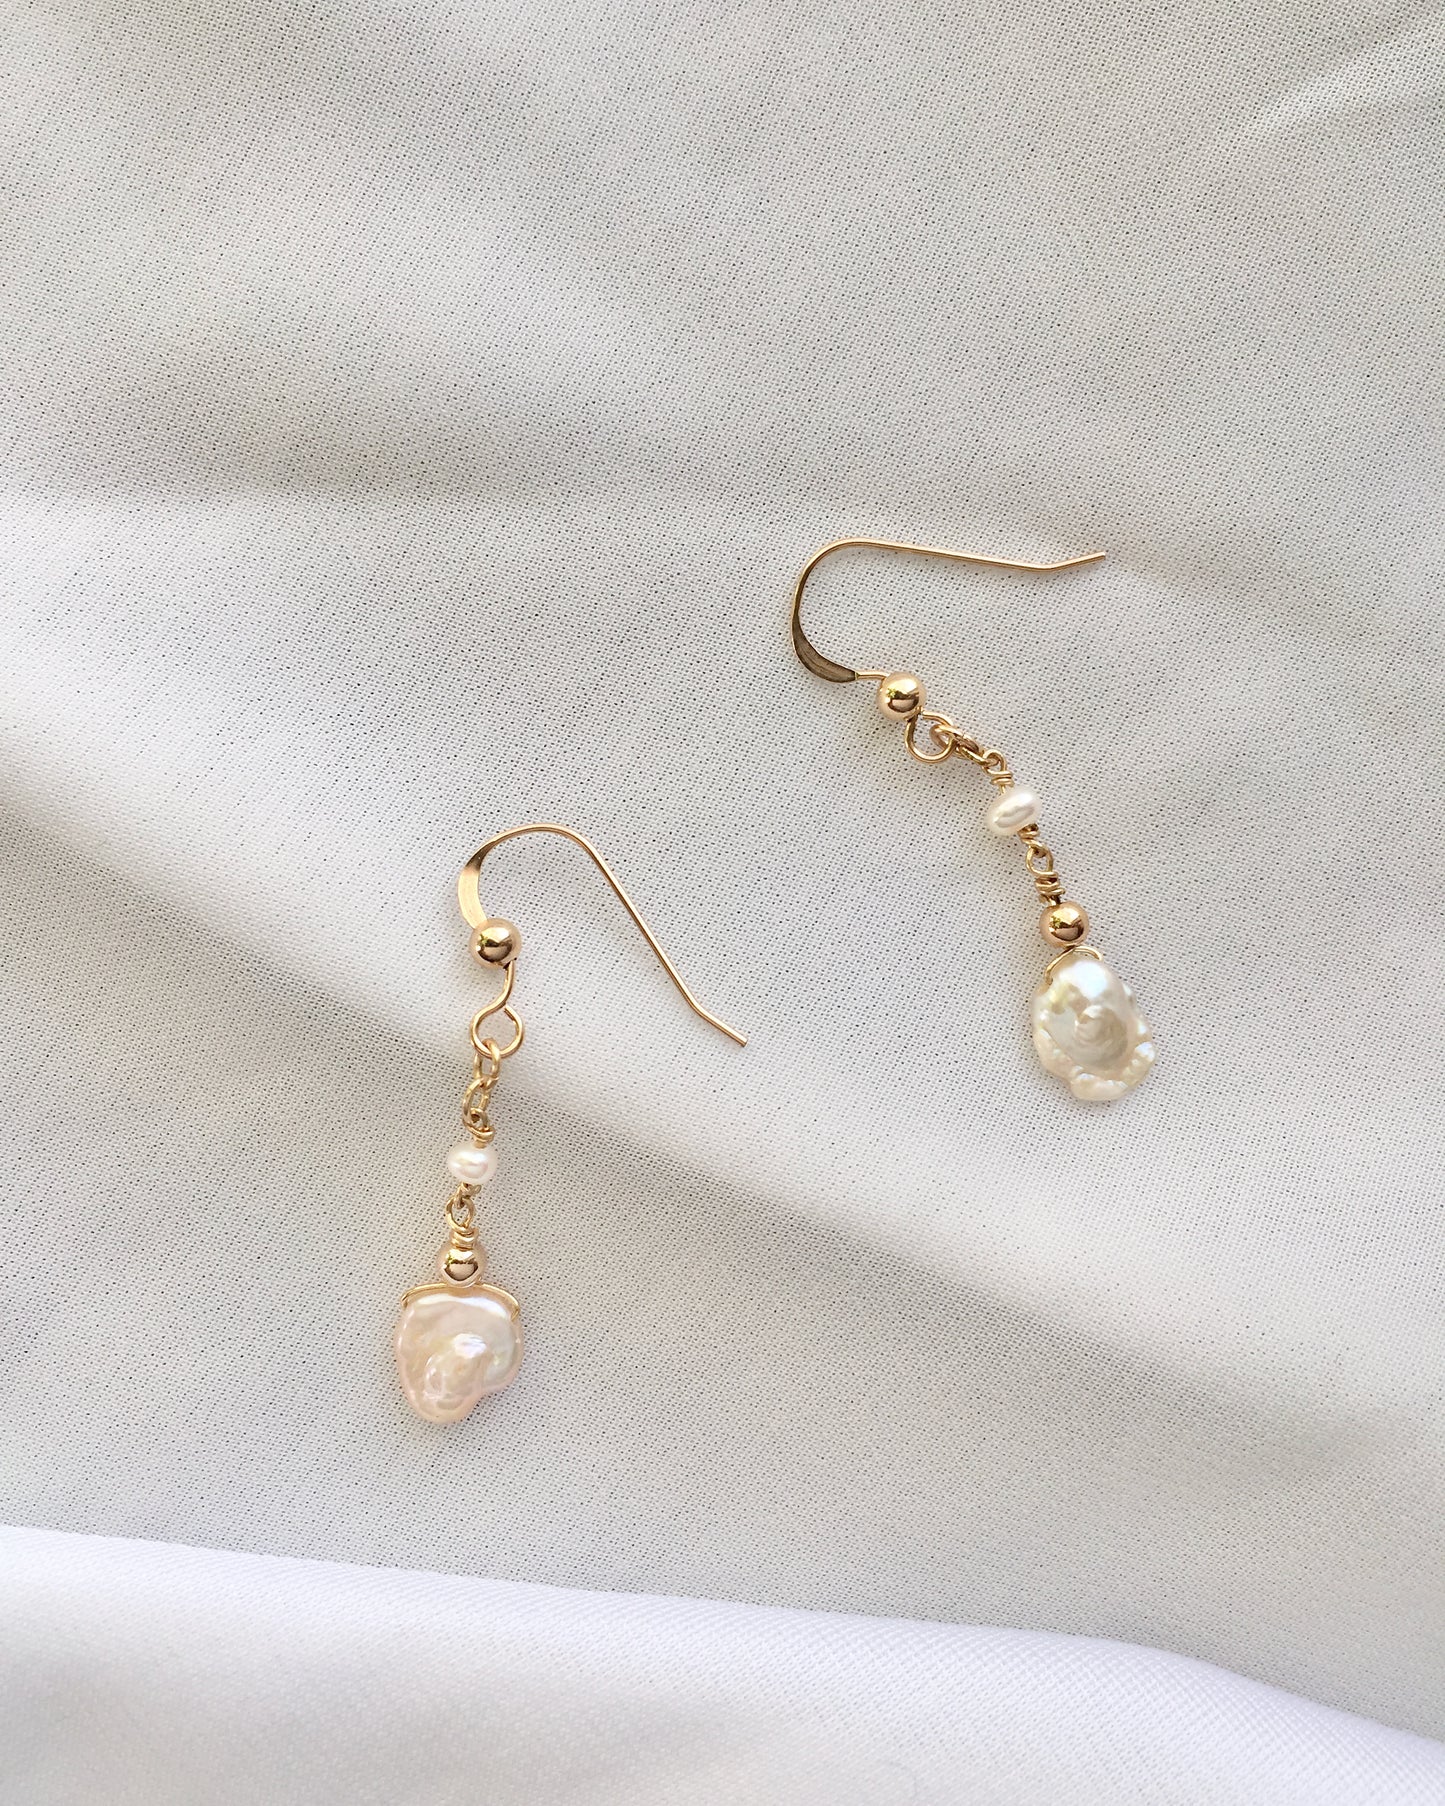 Organic Pearl Drop Earrings | Organic Pearl Dangle Earrings in Gold Filled or Sterling Silver | IB Jewelry